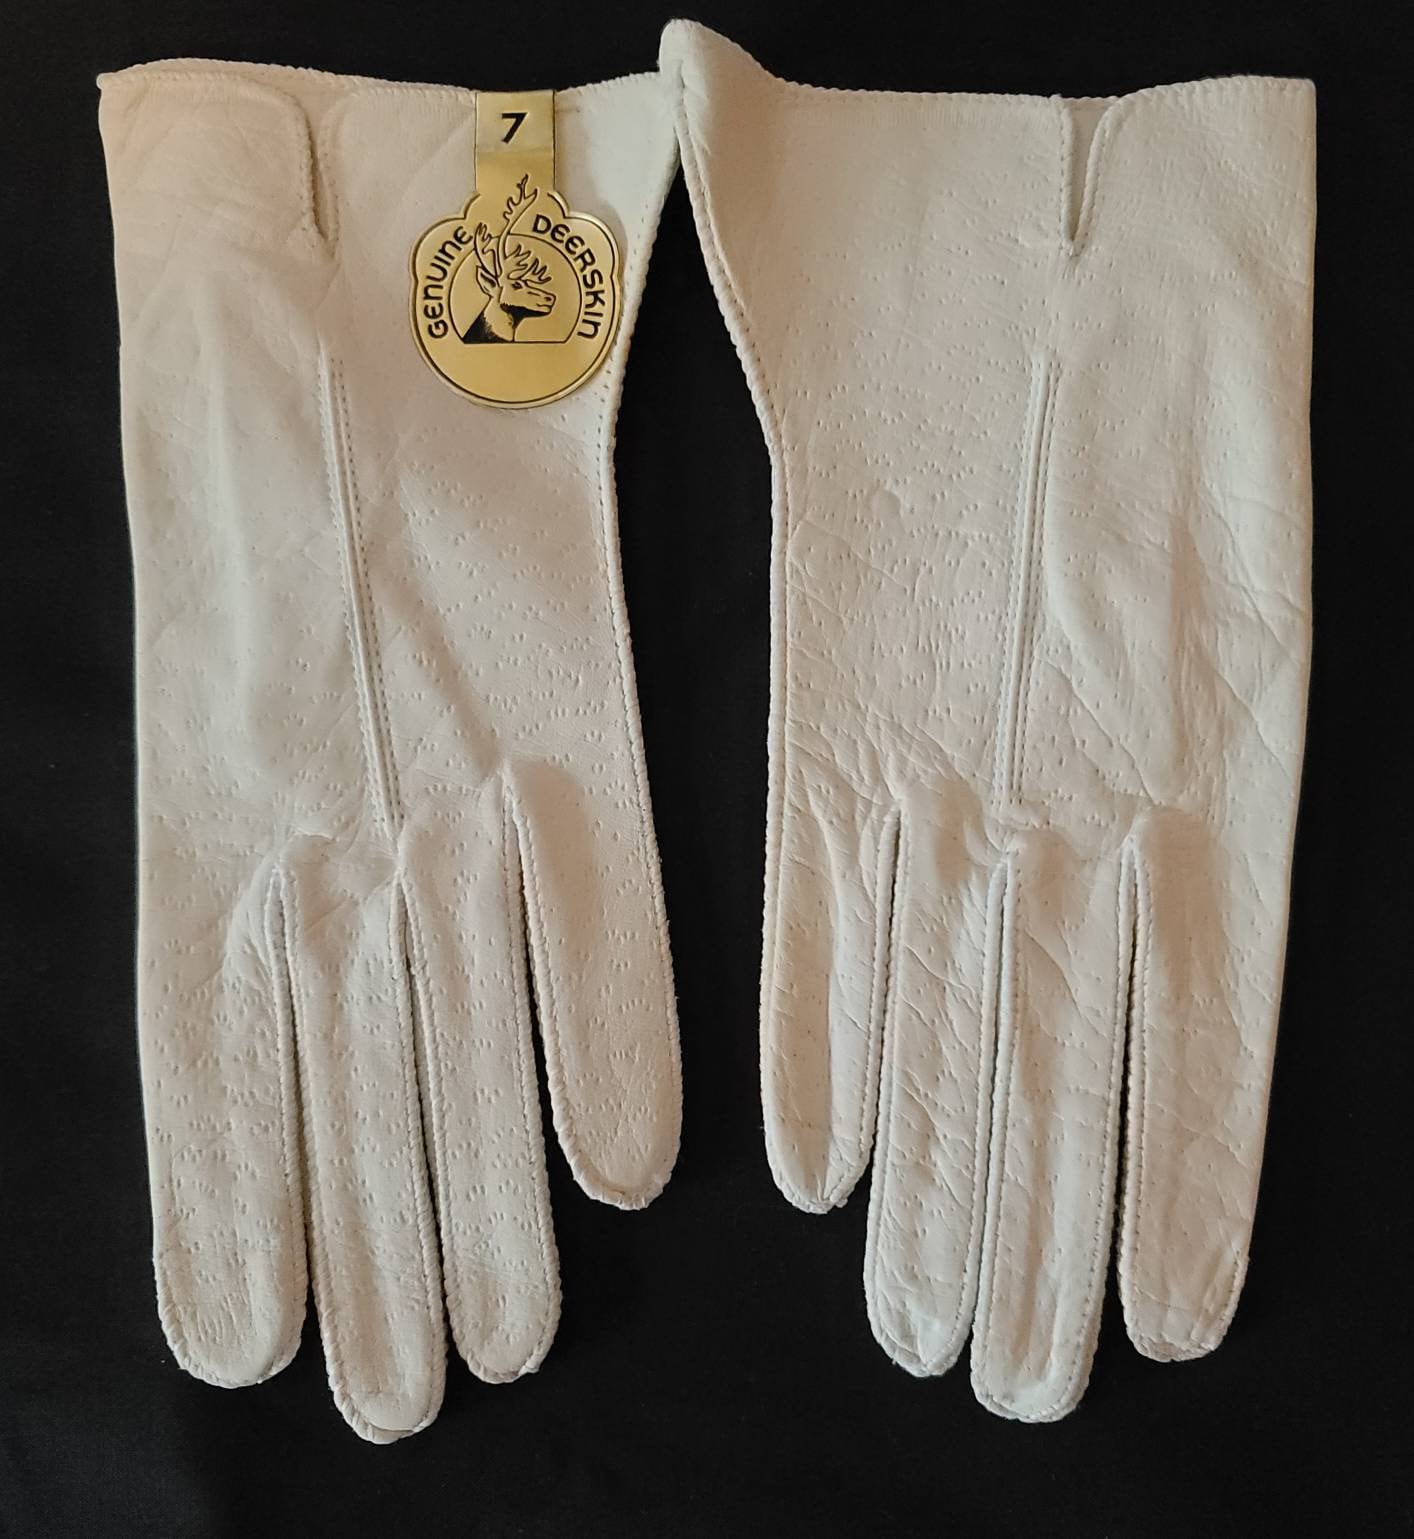 Vintage Deerskin Gloves Unworn 1950s 60s Creamy White Deerskin Wrist Gloves NWT Rockabilly Boho 7